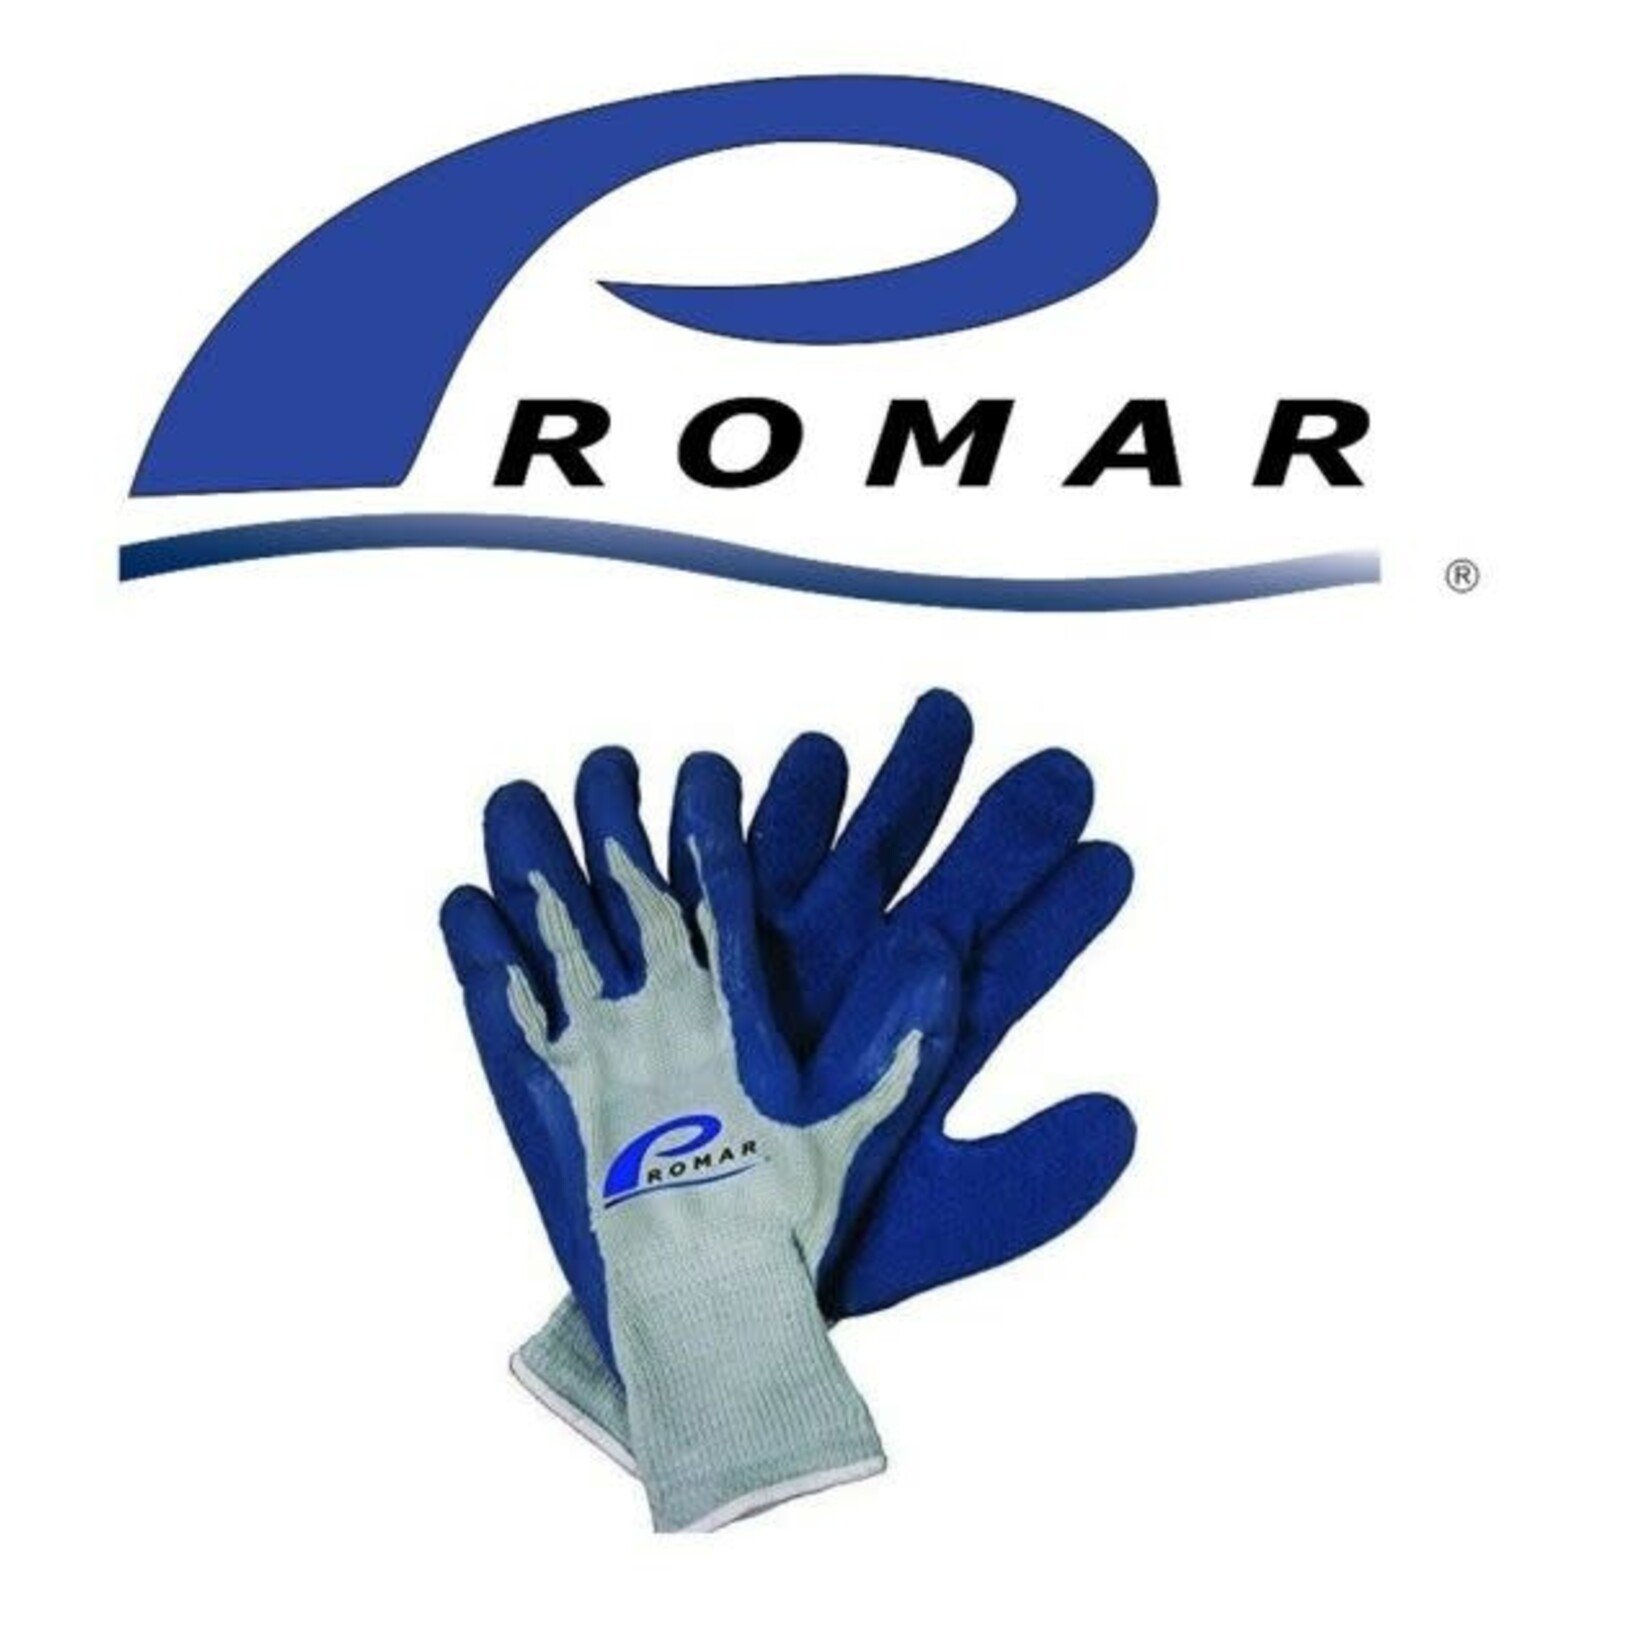 Promar Promar Blue Latex Grip Gloves Large